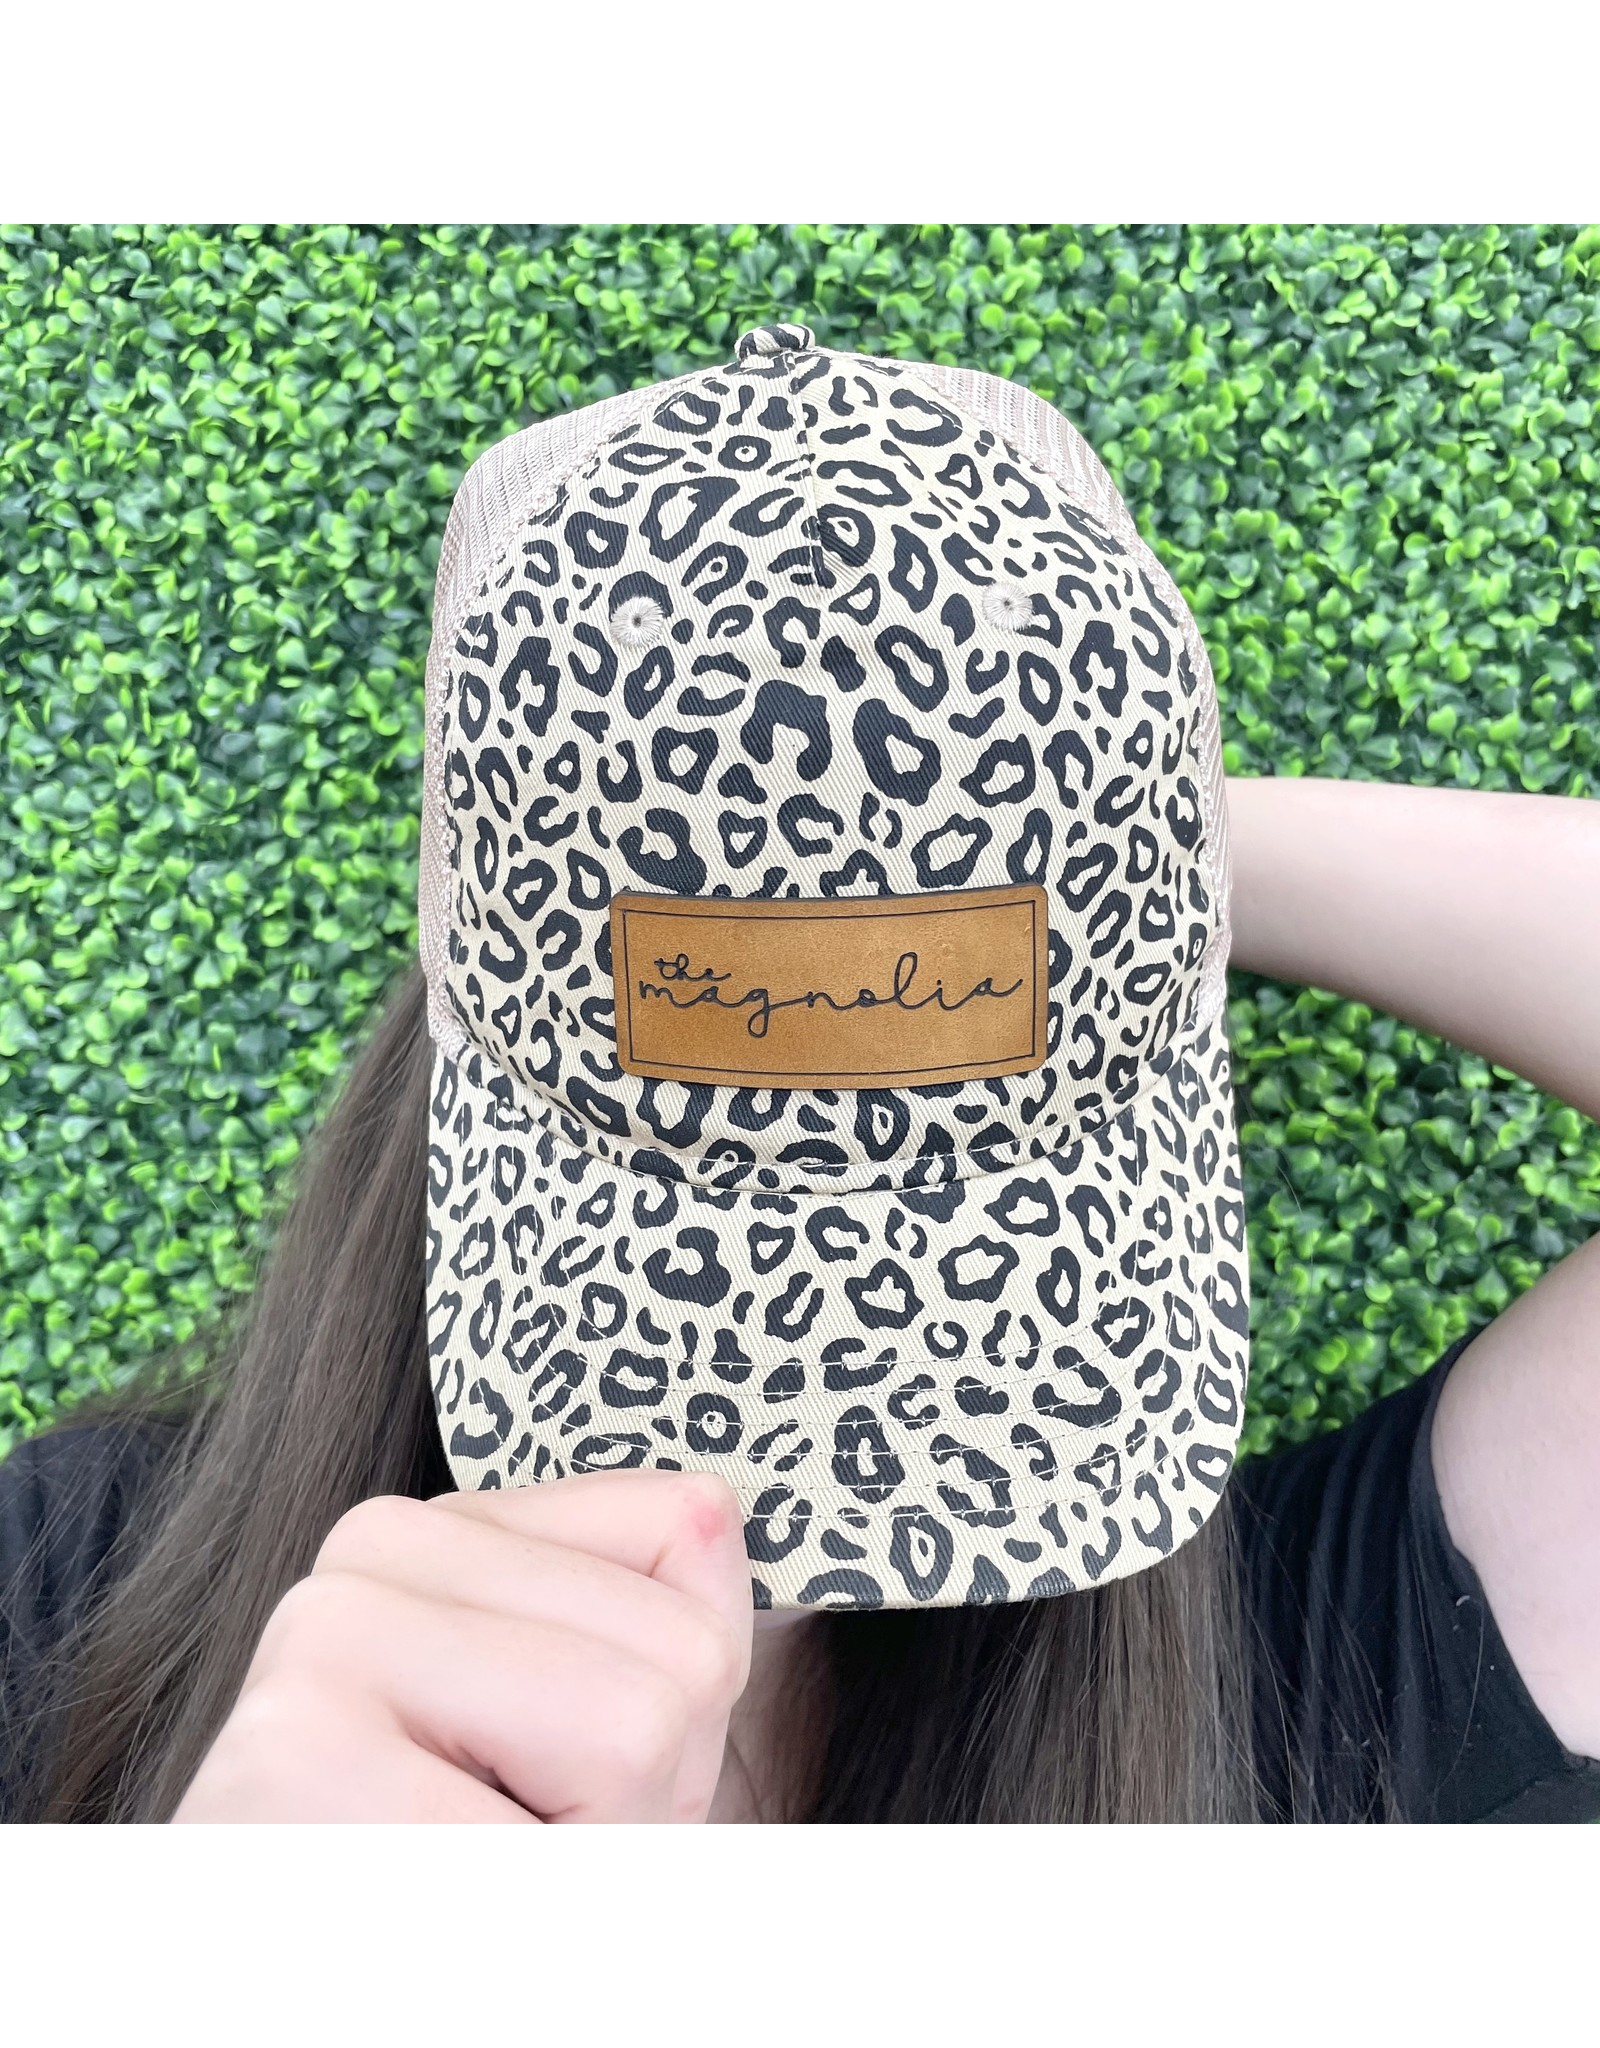 The Magnolia Tan Leopard Hat